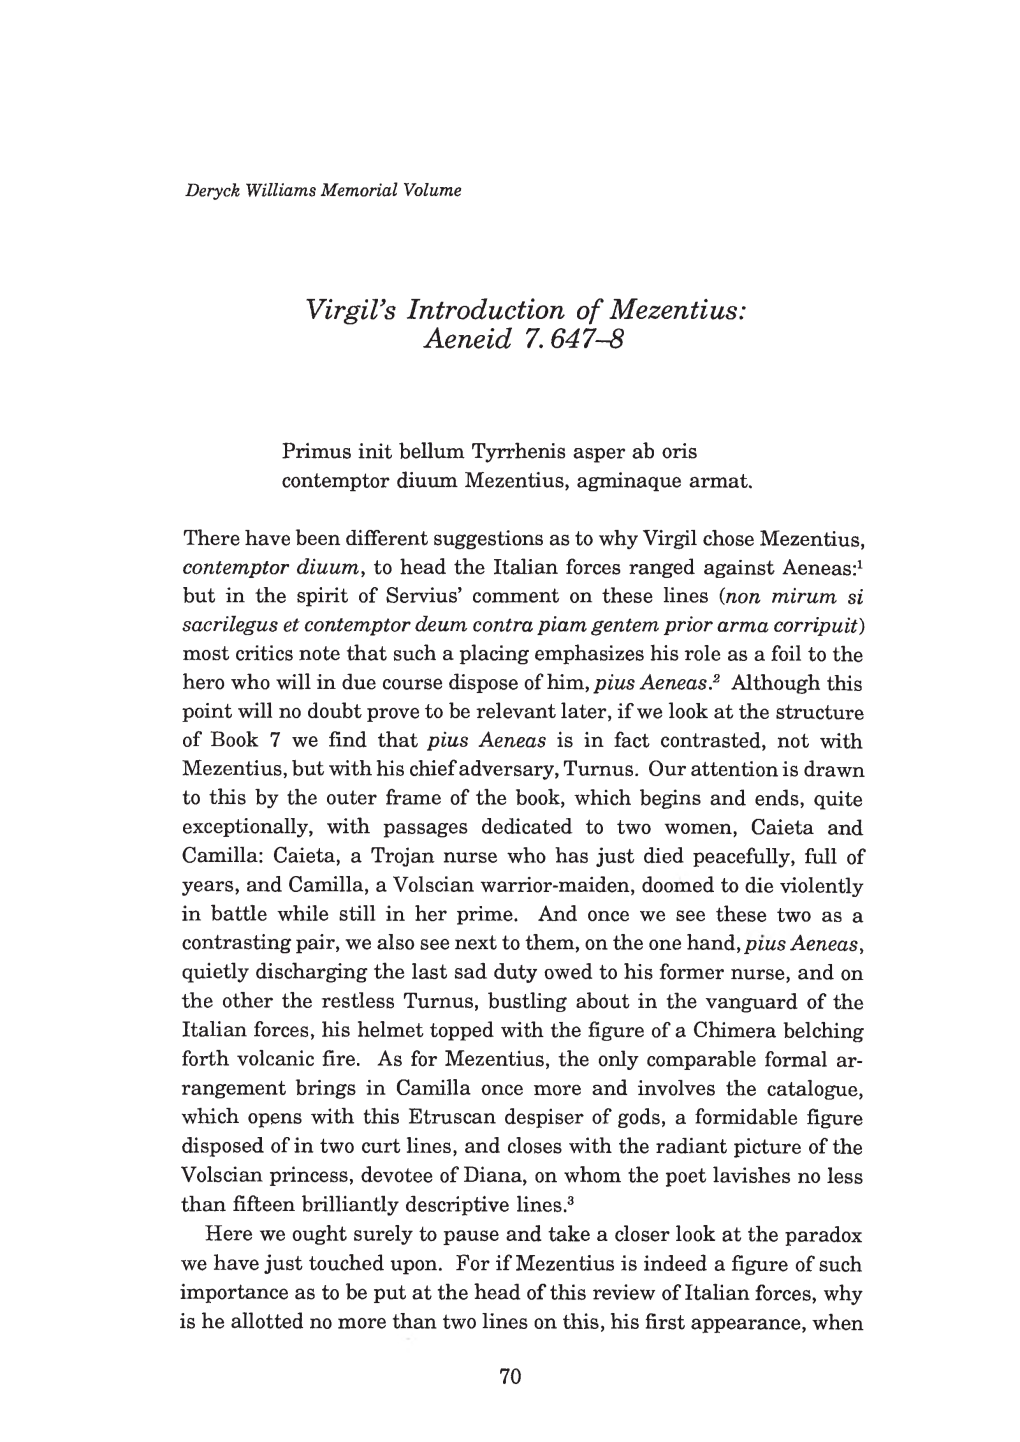 Virgil's Introduction of Mezentius: Aeneid 7. 647-8